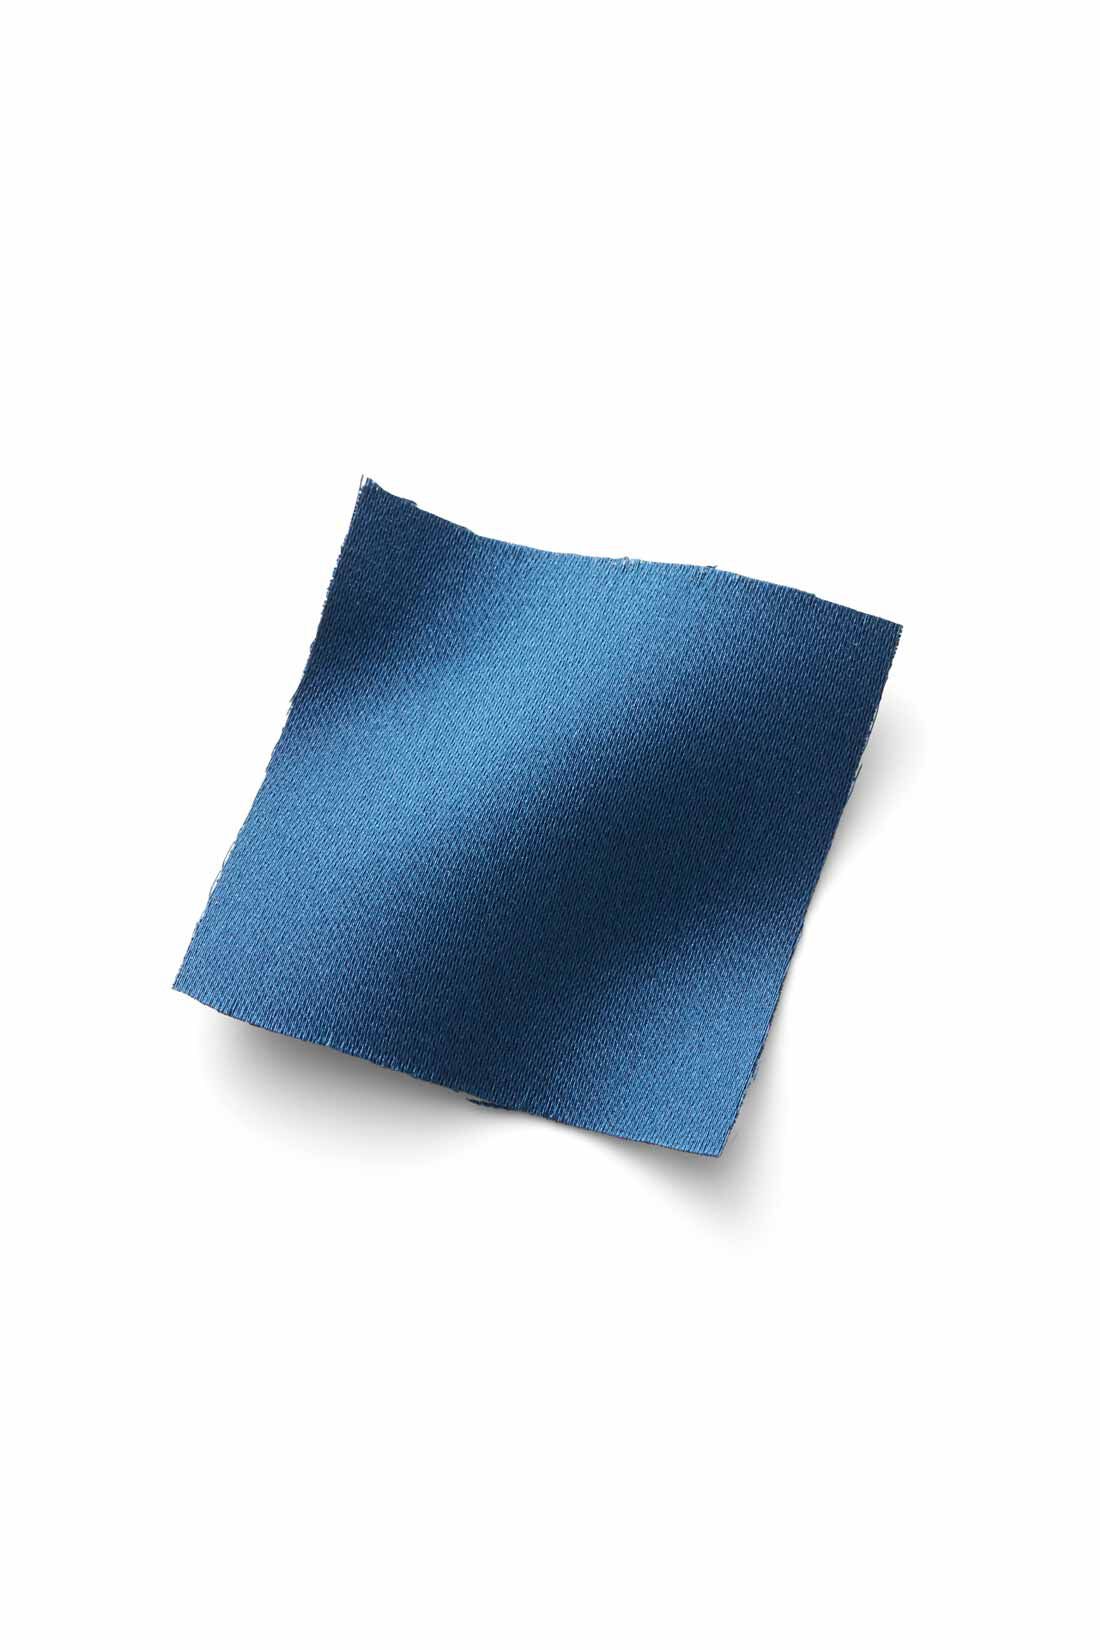 IEDIT|IEDIT[イディット]　サテンの光沢が美しいセミサーキュラースカート〈ディープブルー〉|からだのラインを拾いにくい厚手のサテン素材を厳選。